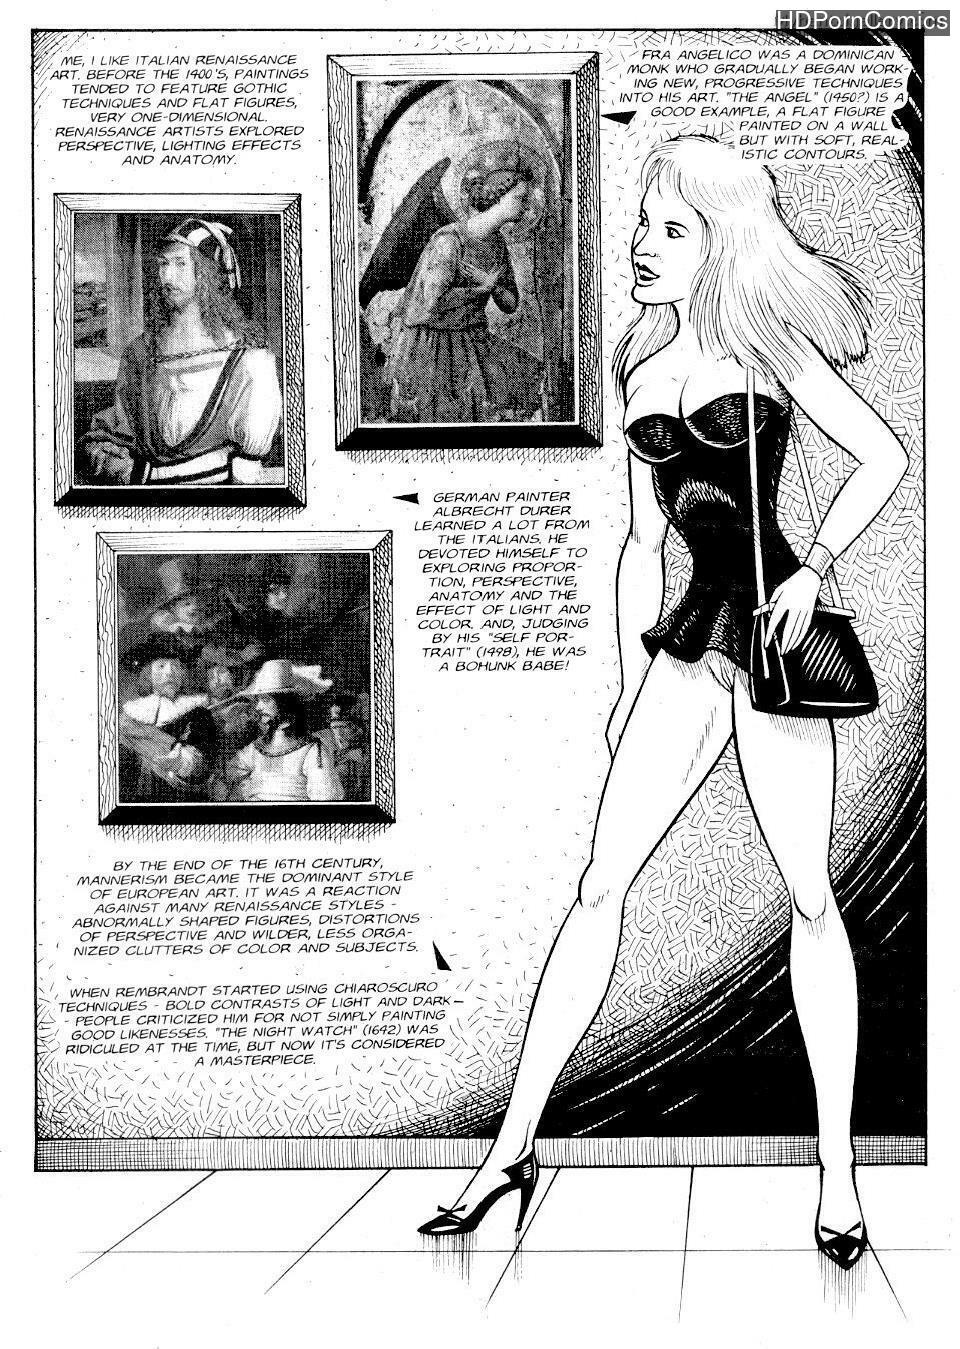 Vintage Lesbian Cartoon - Tabitha Stevens 1 comic porn - HD Porn Comics